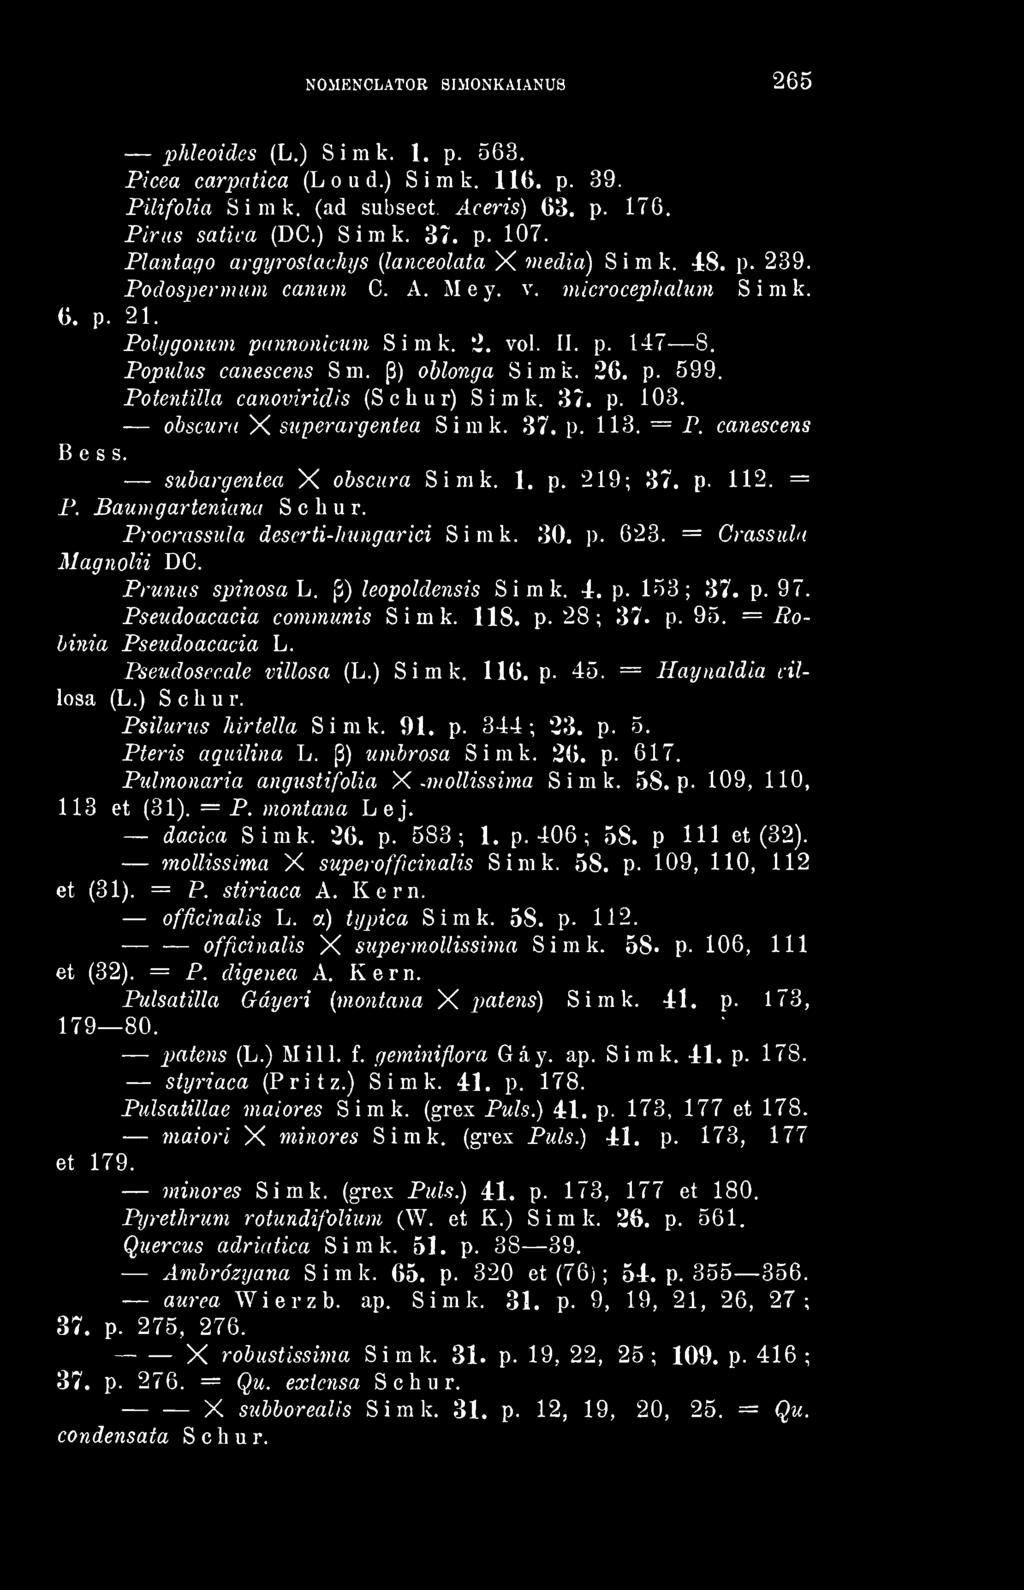 p) ohlonga Simk. 26. p. 599. Poteyitilla canoxnridis (Schur) Simk. 37. p. 103. ohscurd X superargentea Simk. 37. p. 113. = P. canescens B e s s. subargentea X obscura Simk. 1. p. 219; 37. p. 112. = P. Baumgarteniana Schur.